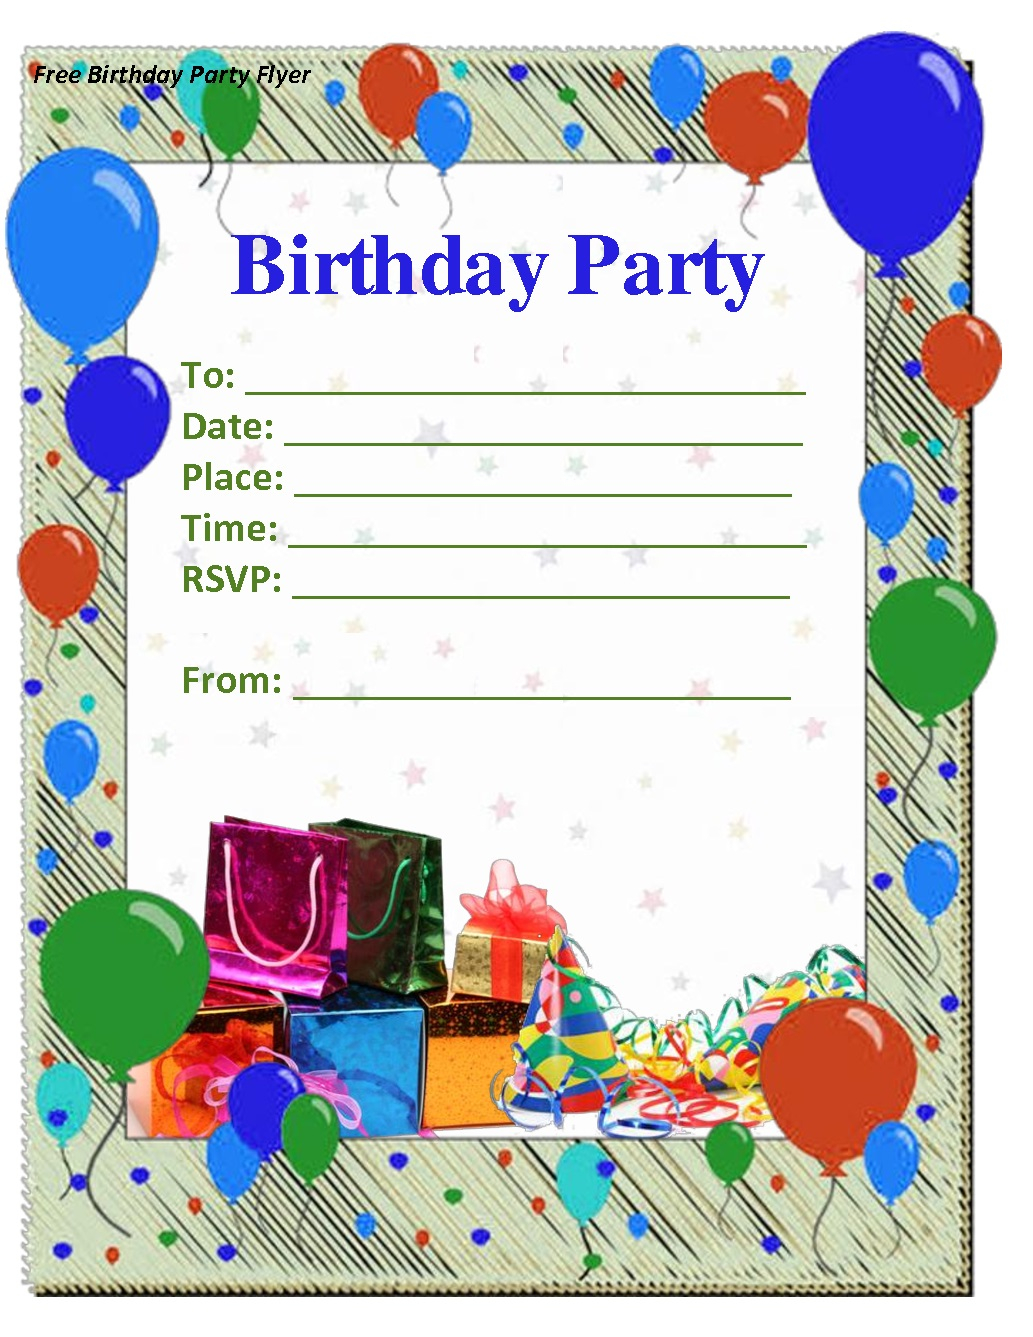 Birthday Card Invitation Ideas Birthday Card Invites Birthday Invitation Examples